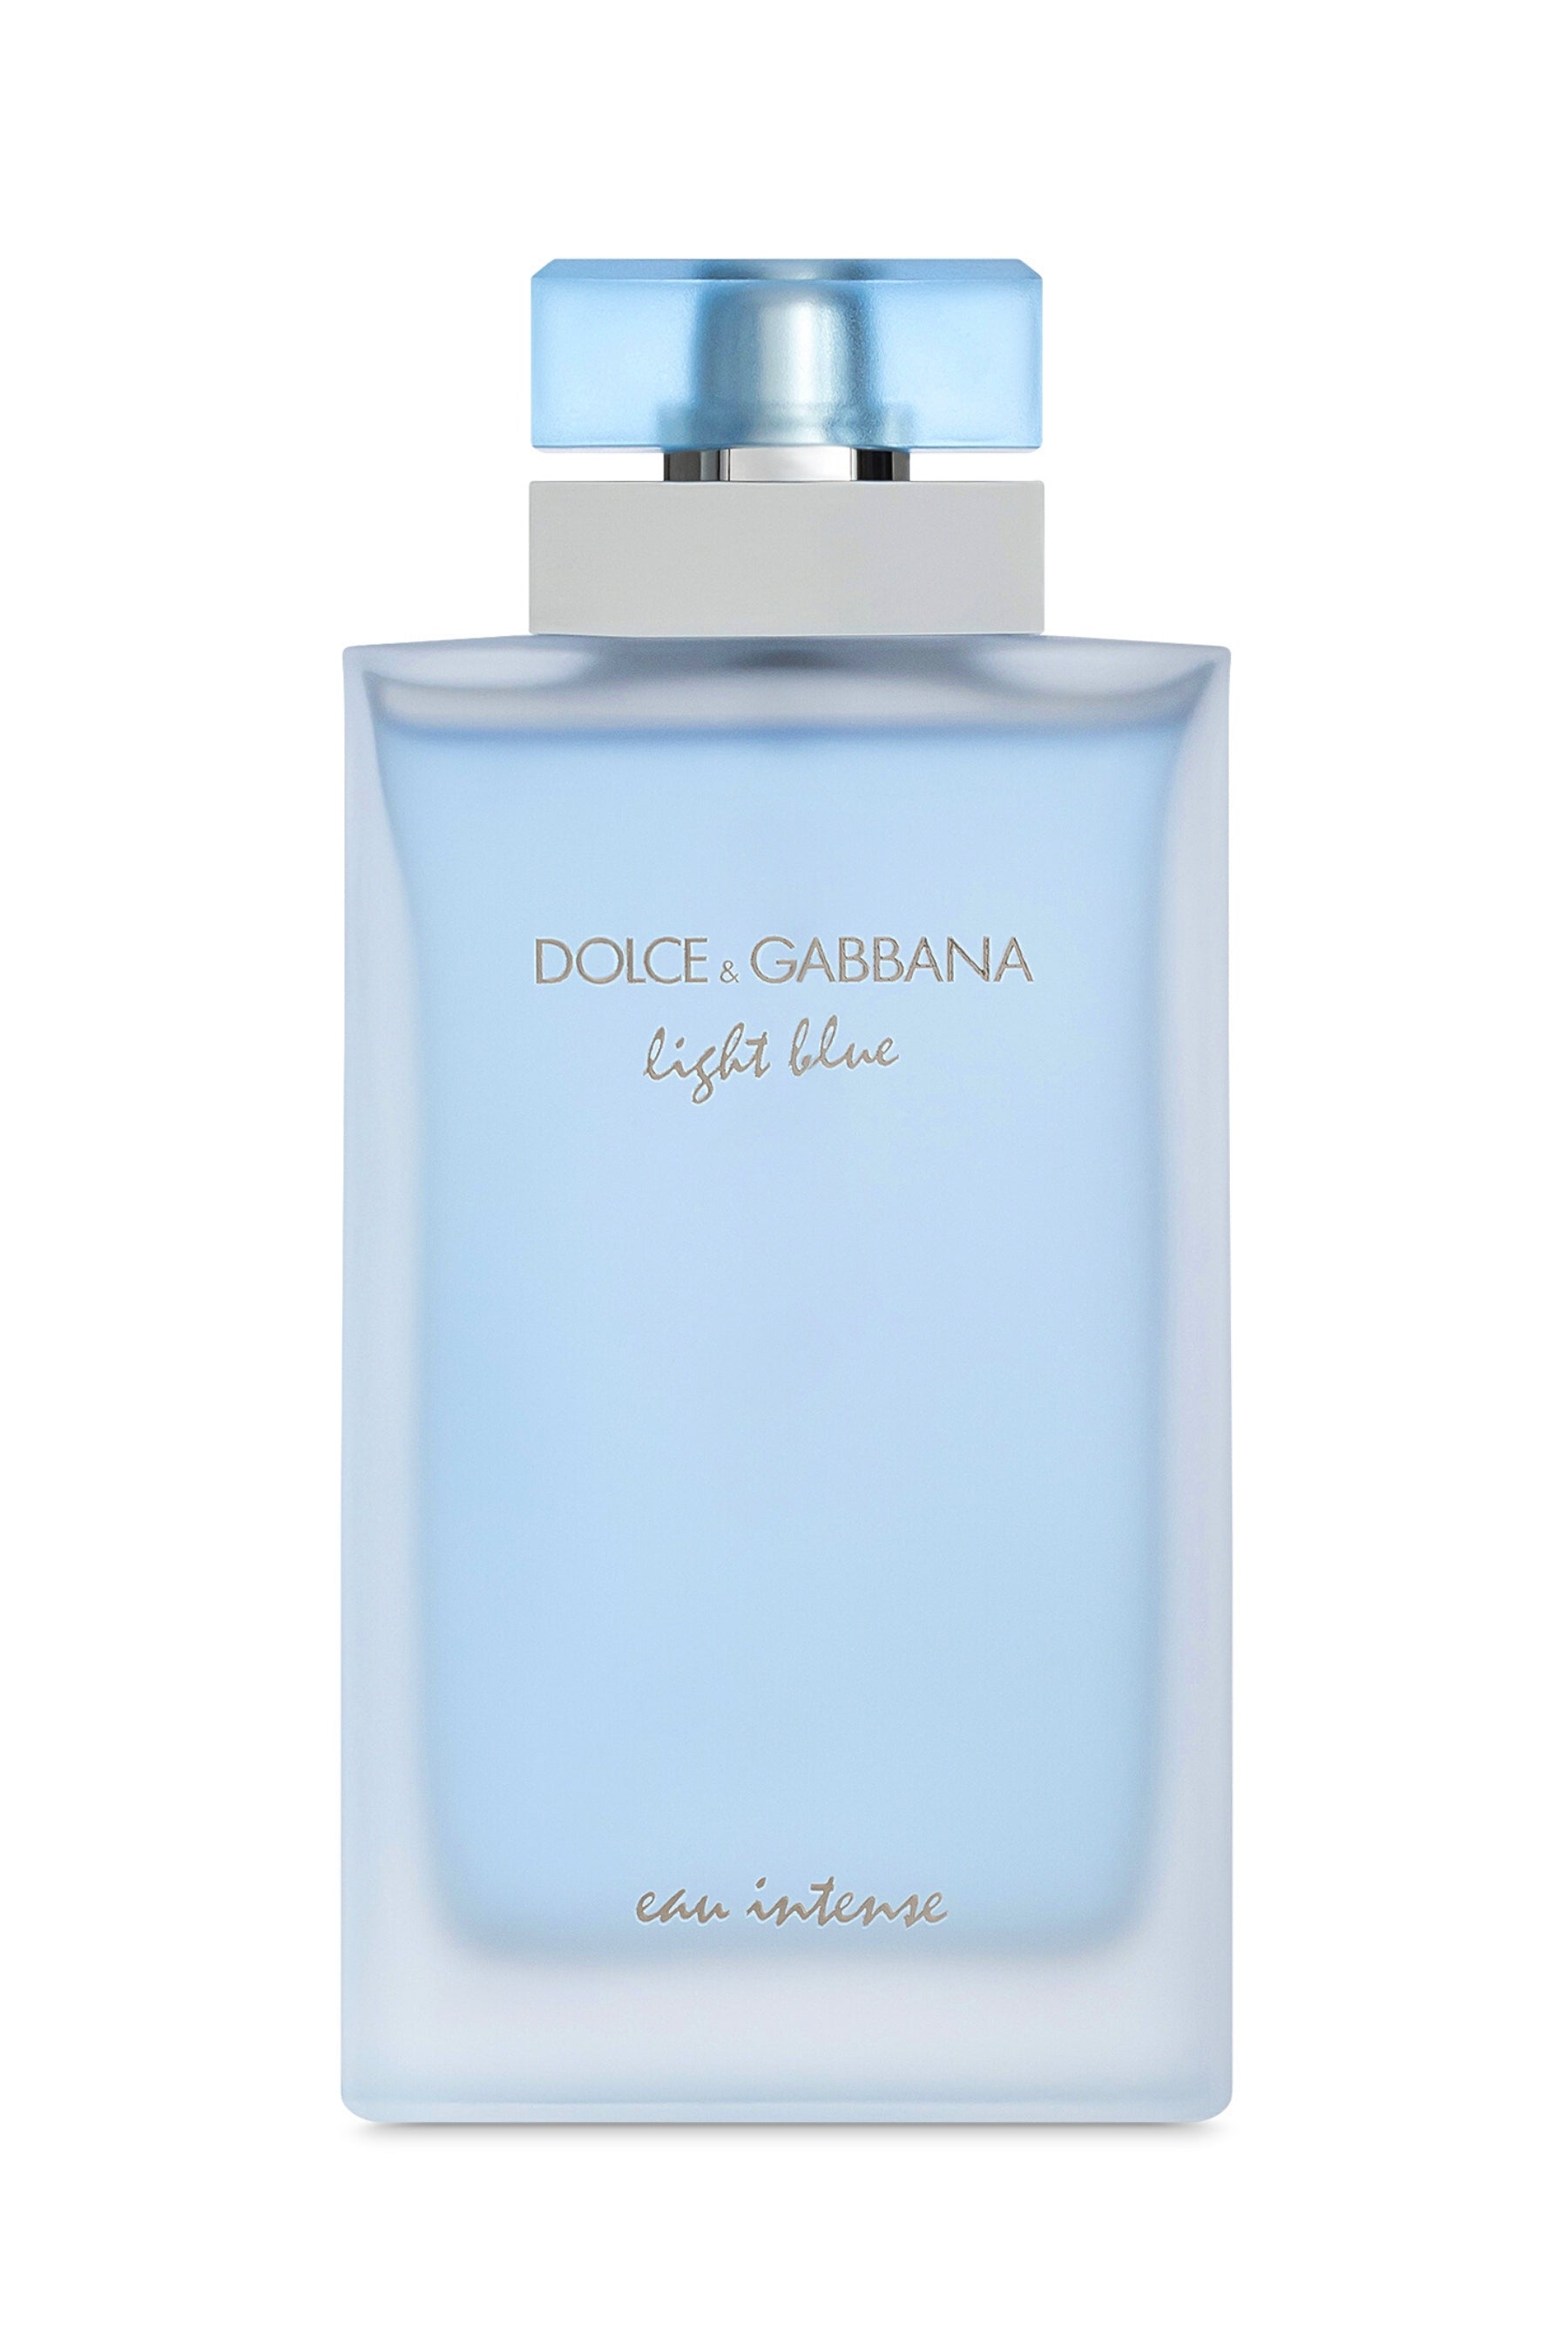 Dolce Gabbana | Light Blue Eau Intense Eau Parfum -